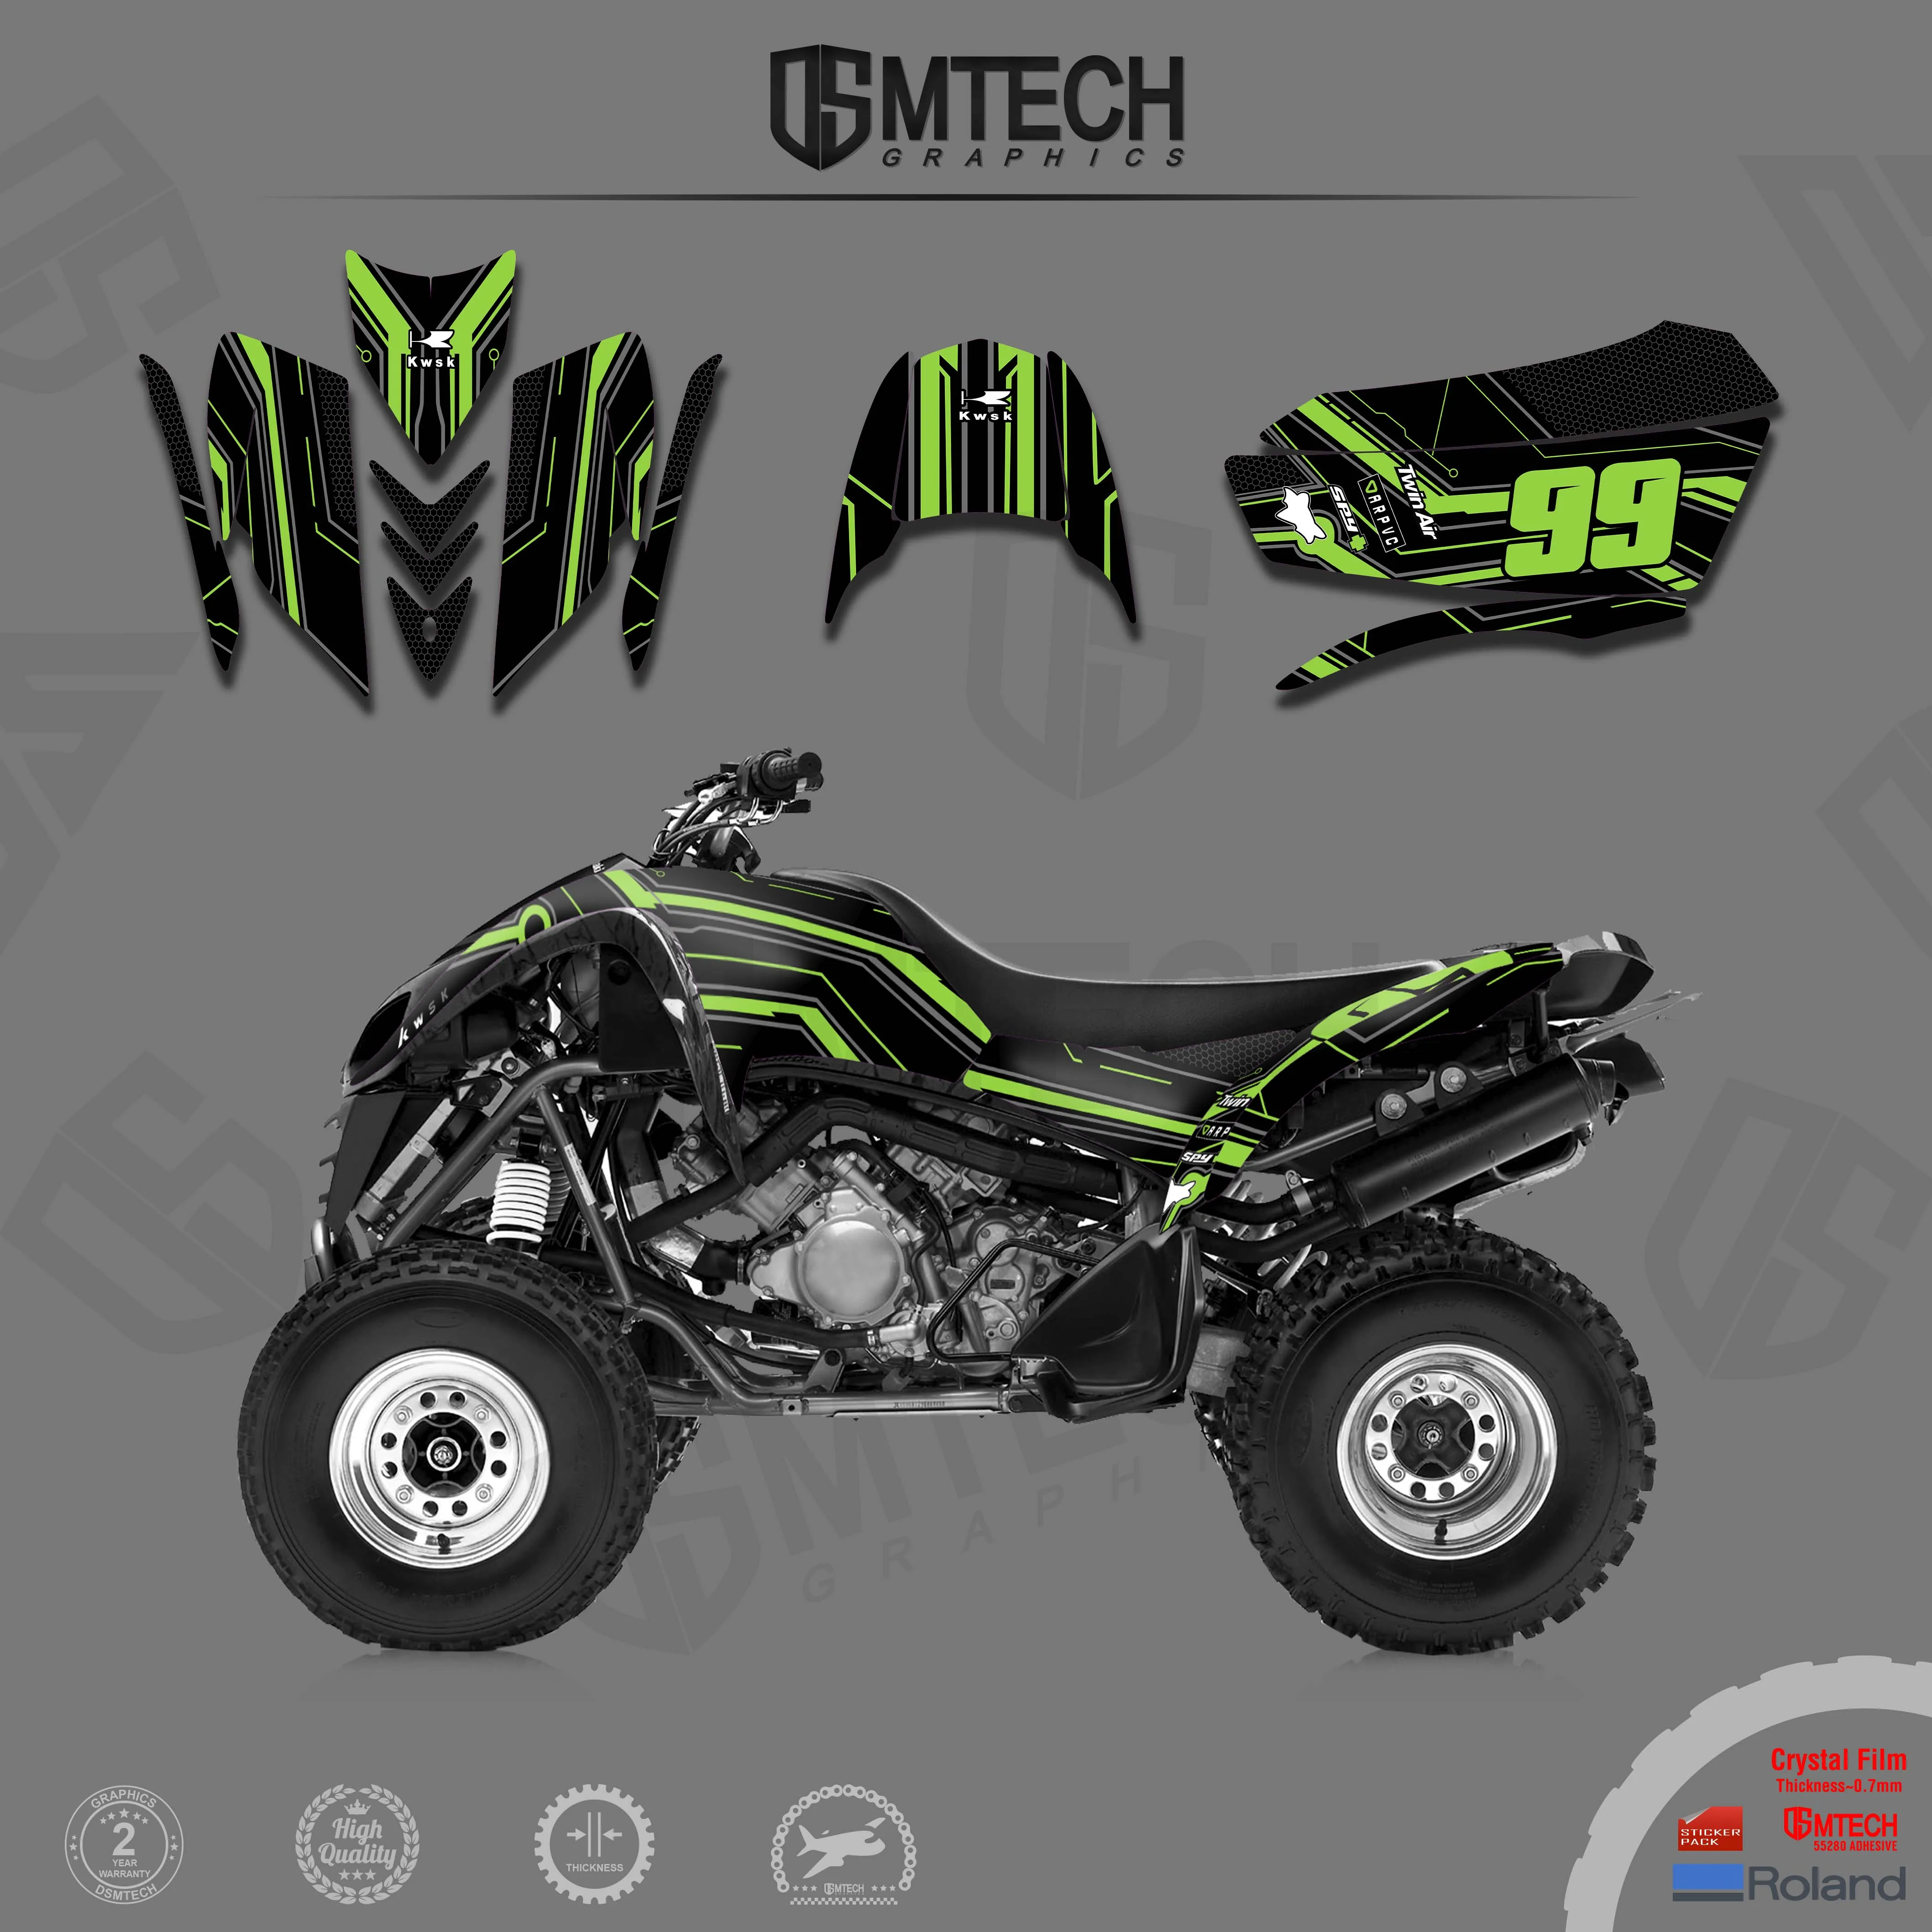 DSMTECH team motorcycle off-road sticker KFX Kawasaki  700 combination graphics kit